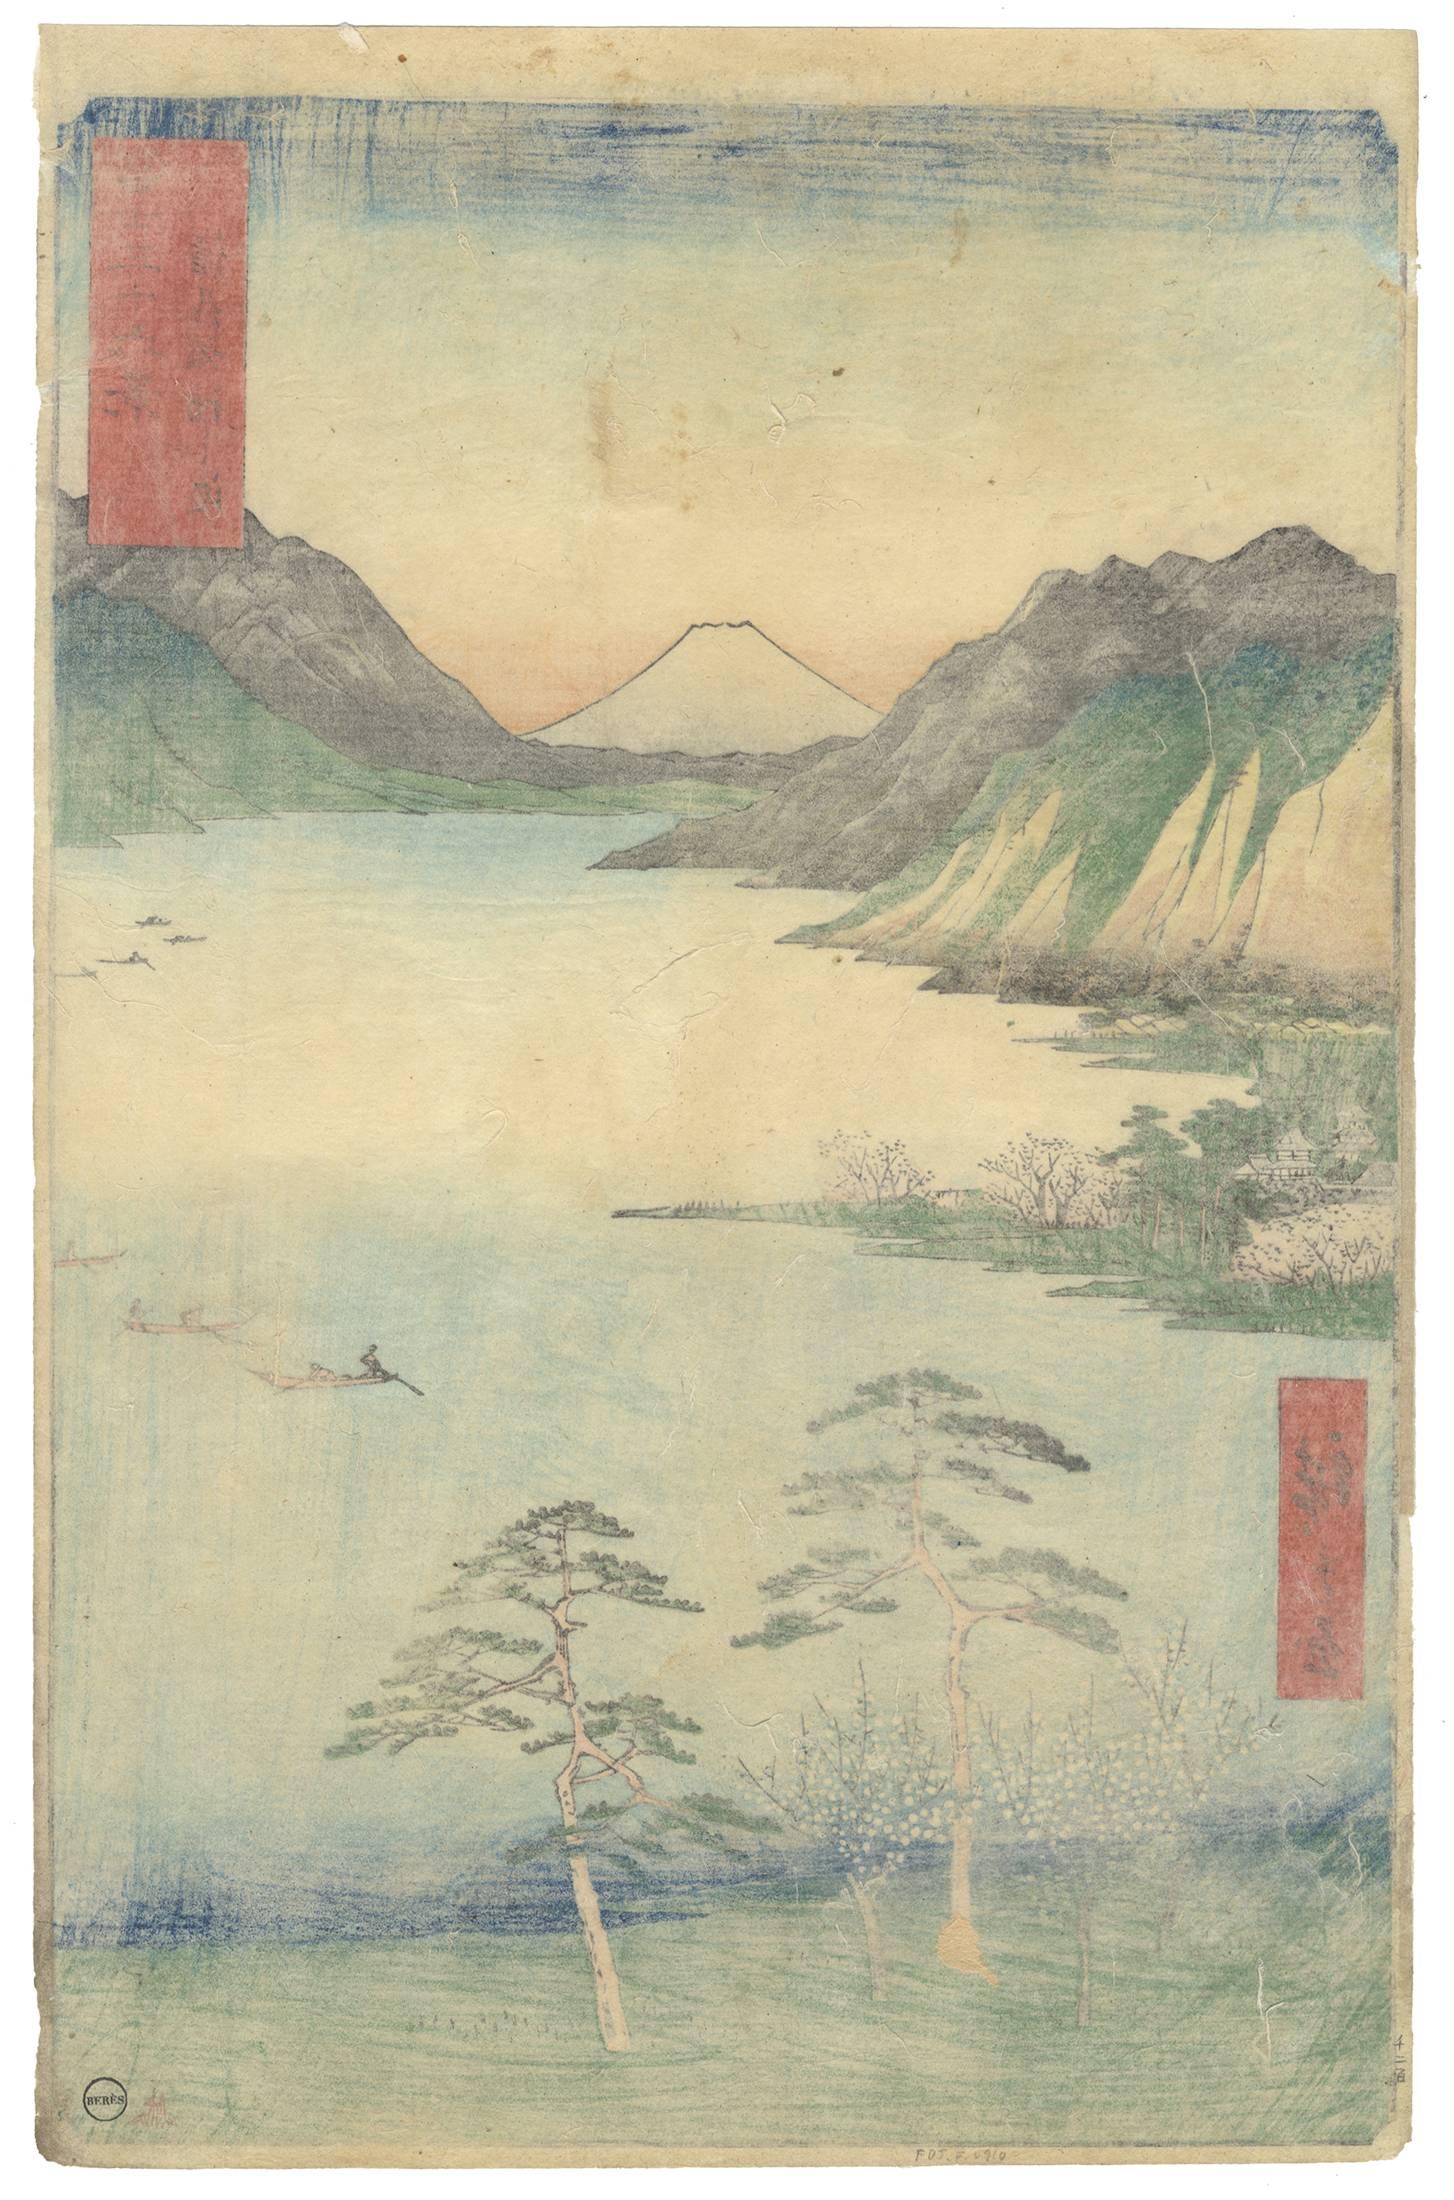 Title: 25. Shinano suwa no mizuumi (Lake Suwa in Shinano Province)
Artist: Ando Hiroshige 1st / Ando Hiroshige I (1797 – 1858)
Series: 36 Views of Mt. Fuji
Publisher: Tsutaya Kichizo
Published in 1858.

A view of Mount Fuji through the valley